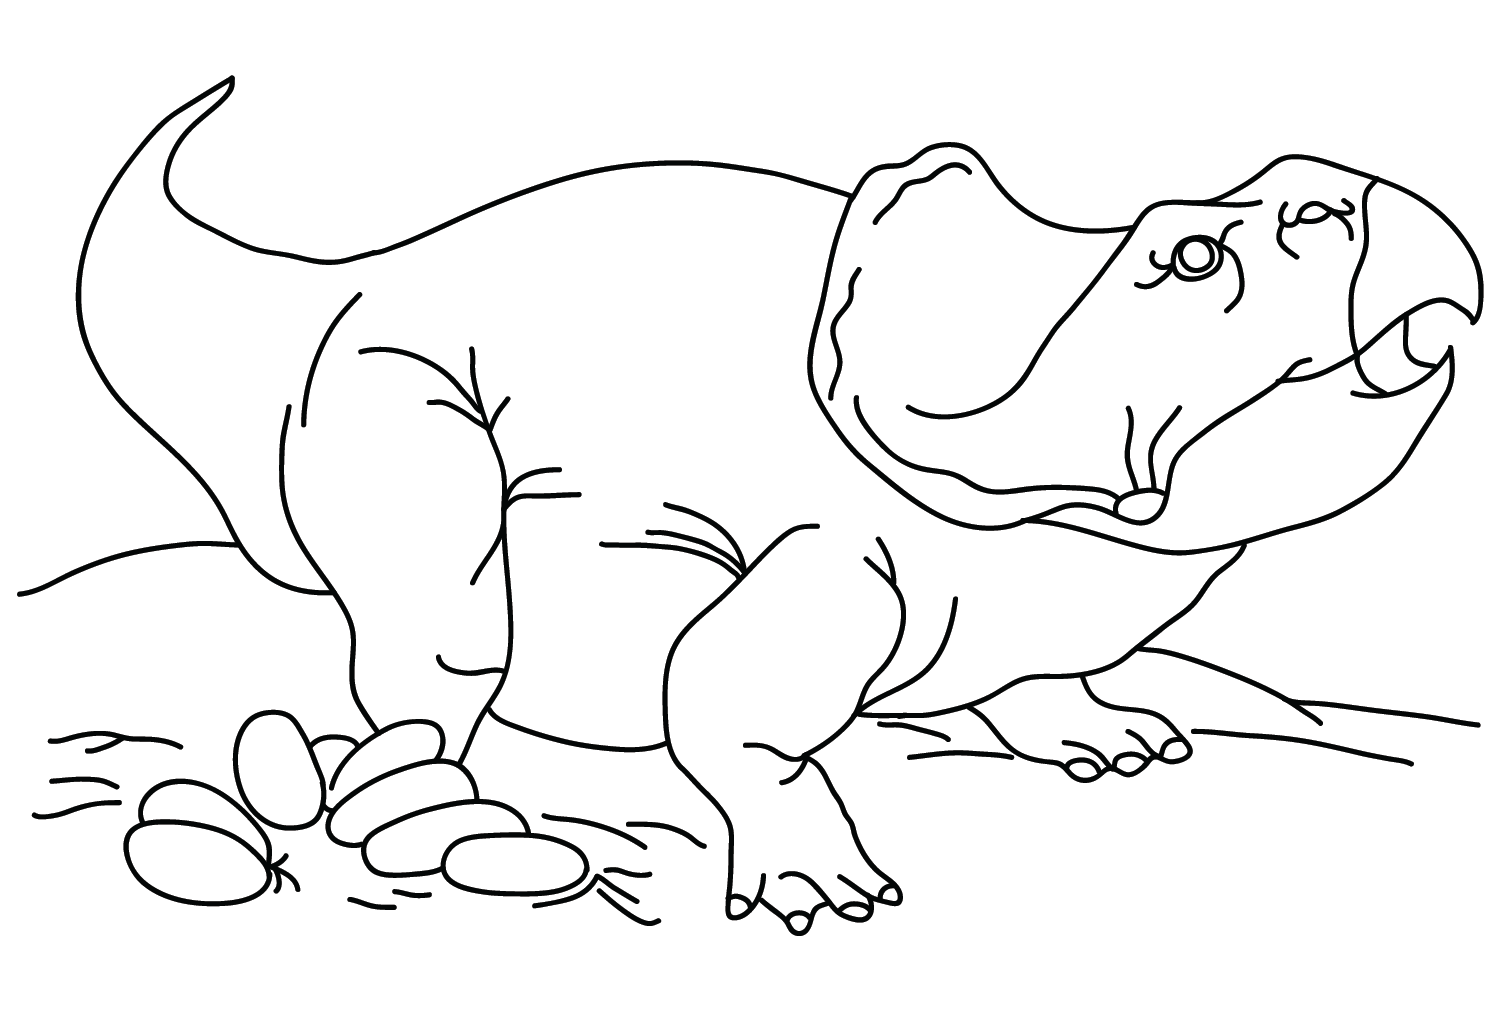 Ausmalbilder Protoceratops und Eier von Protoceratops